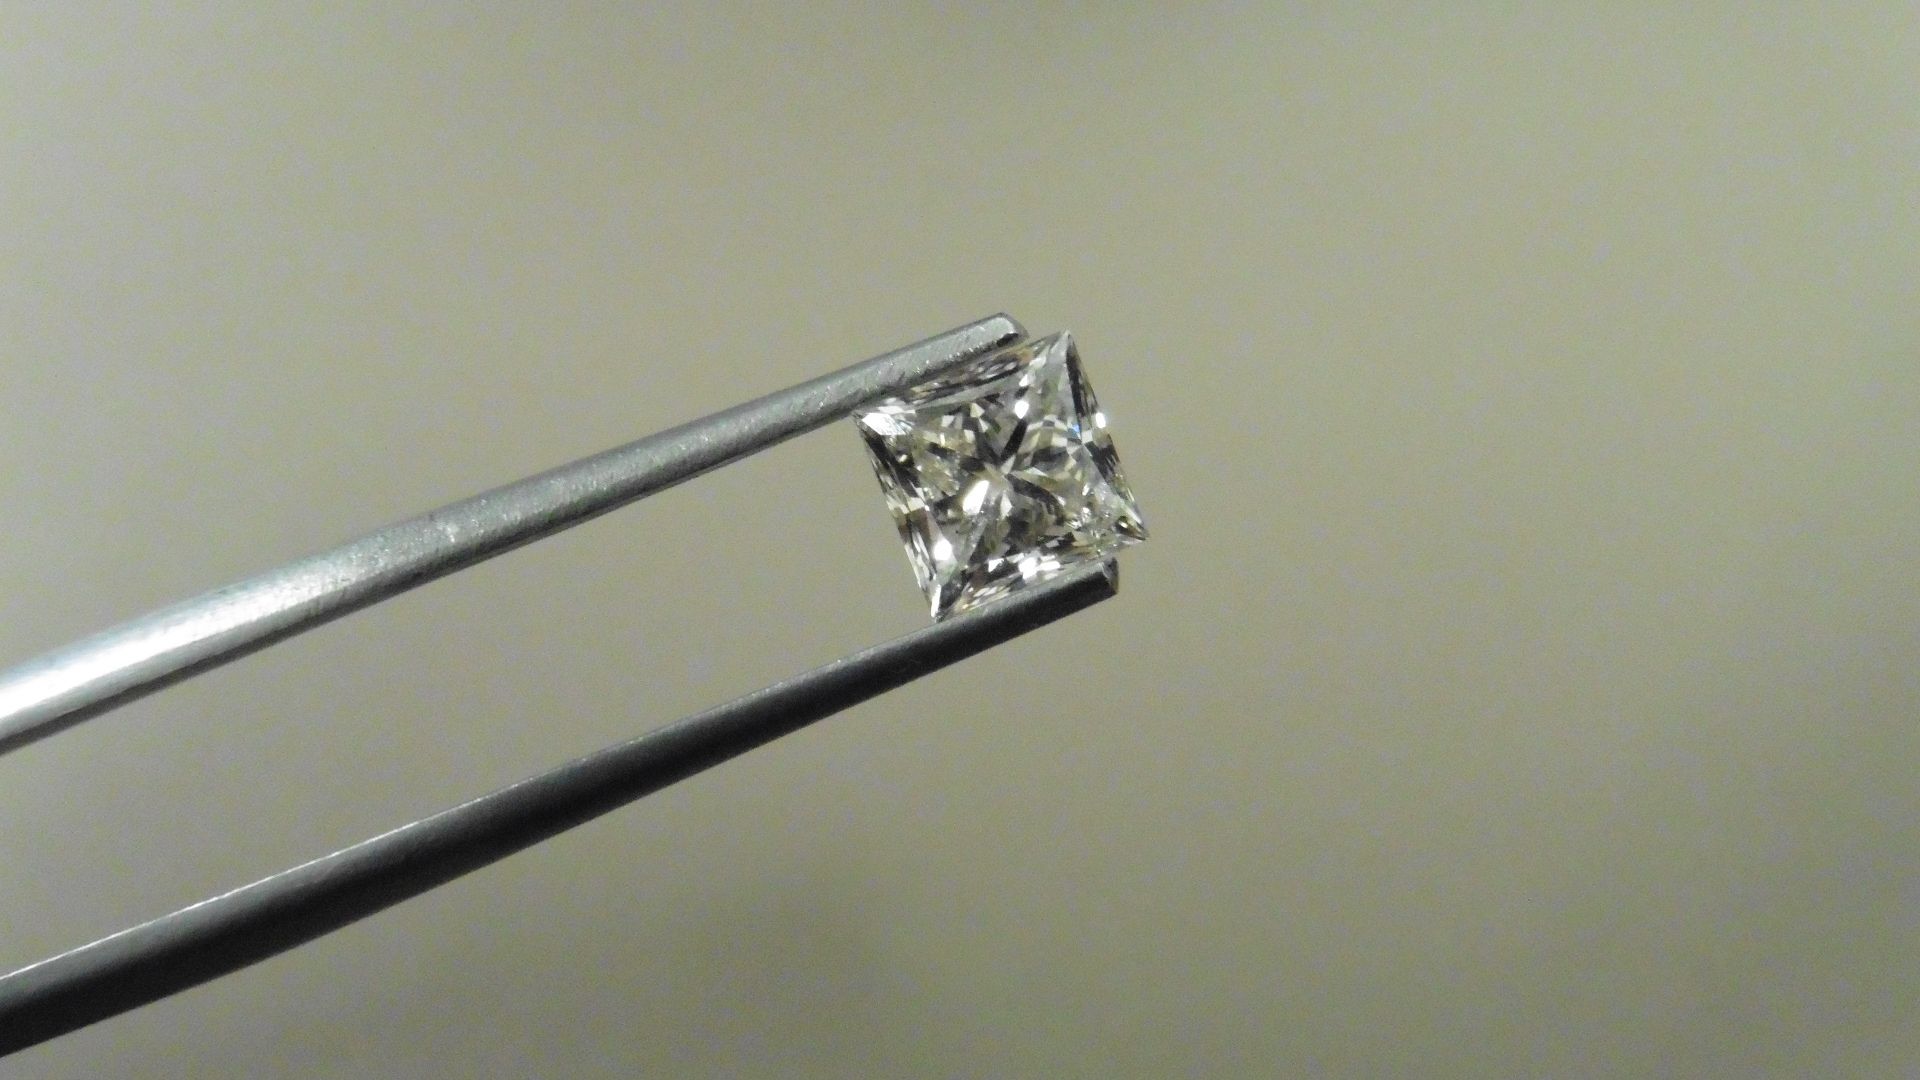 1.00ct natural loose princess cut diamond. J colour and I2 clarity. 5.56 x 5.37 x 3.78mm. No